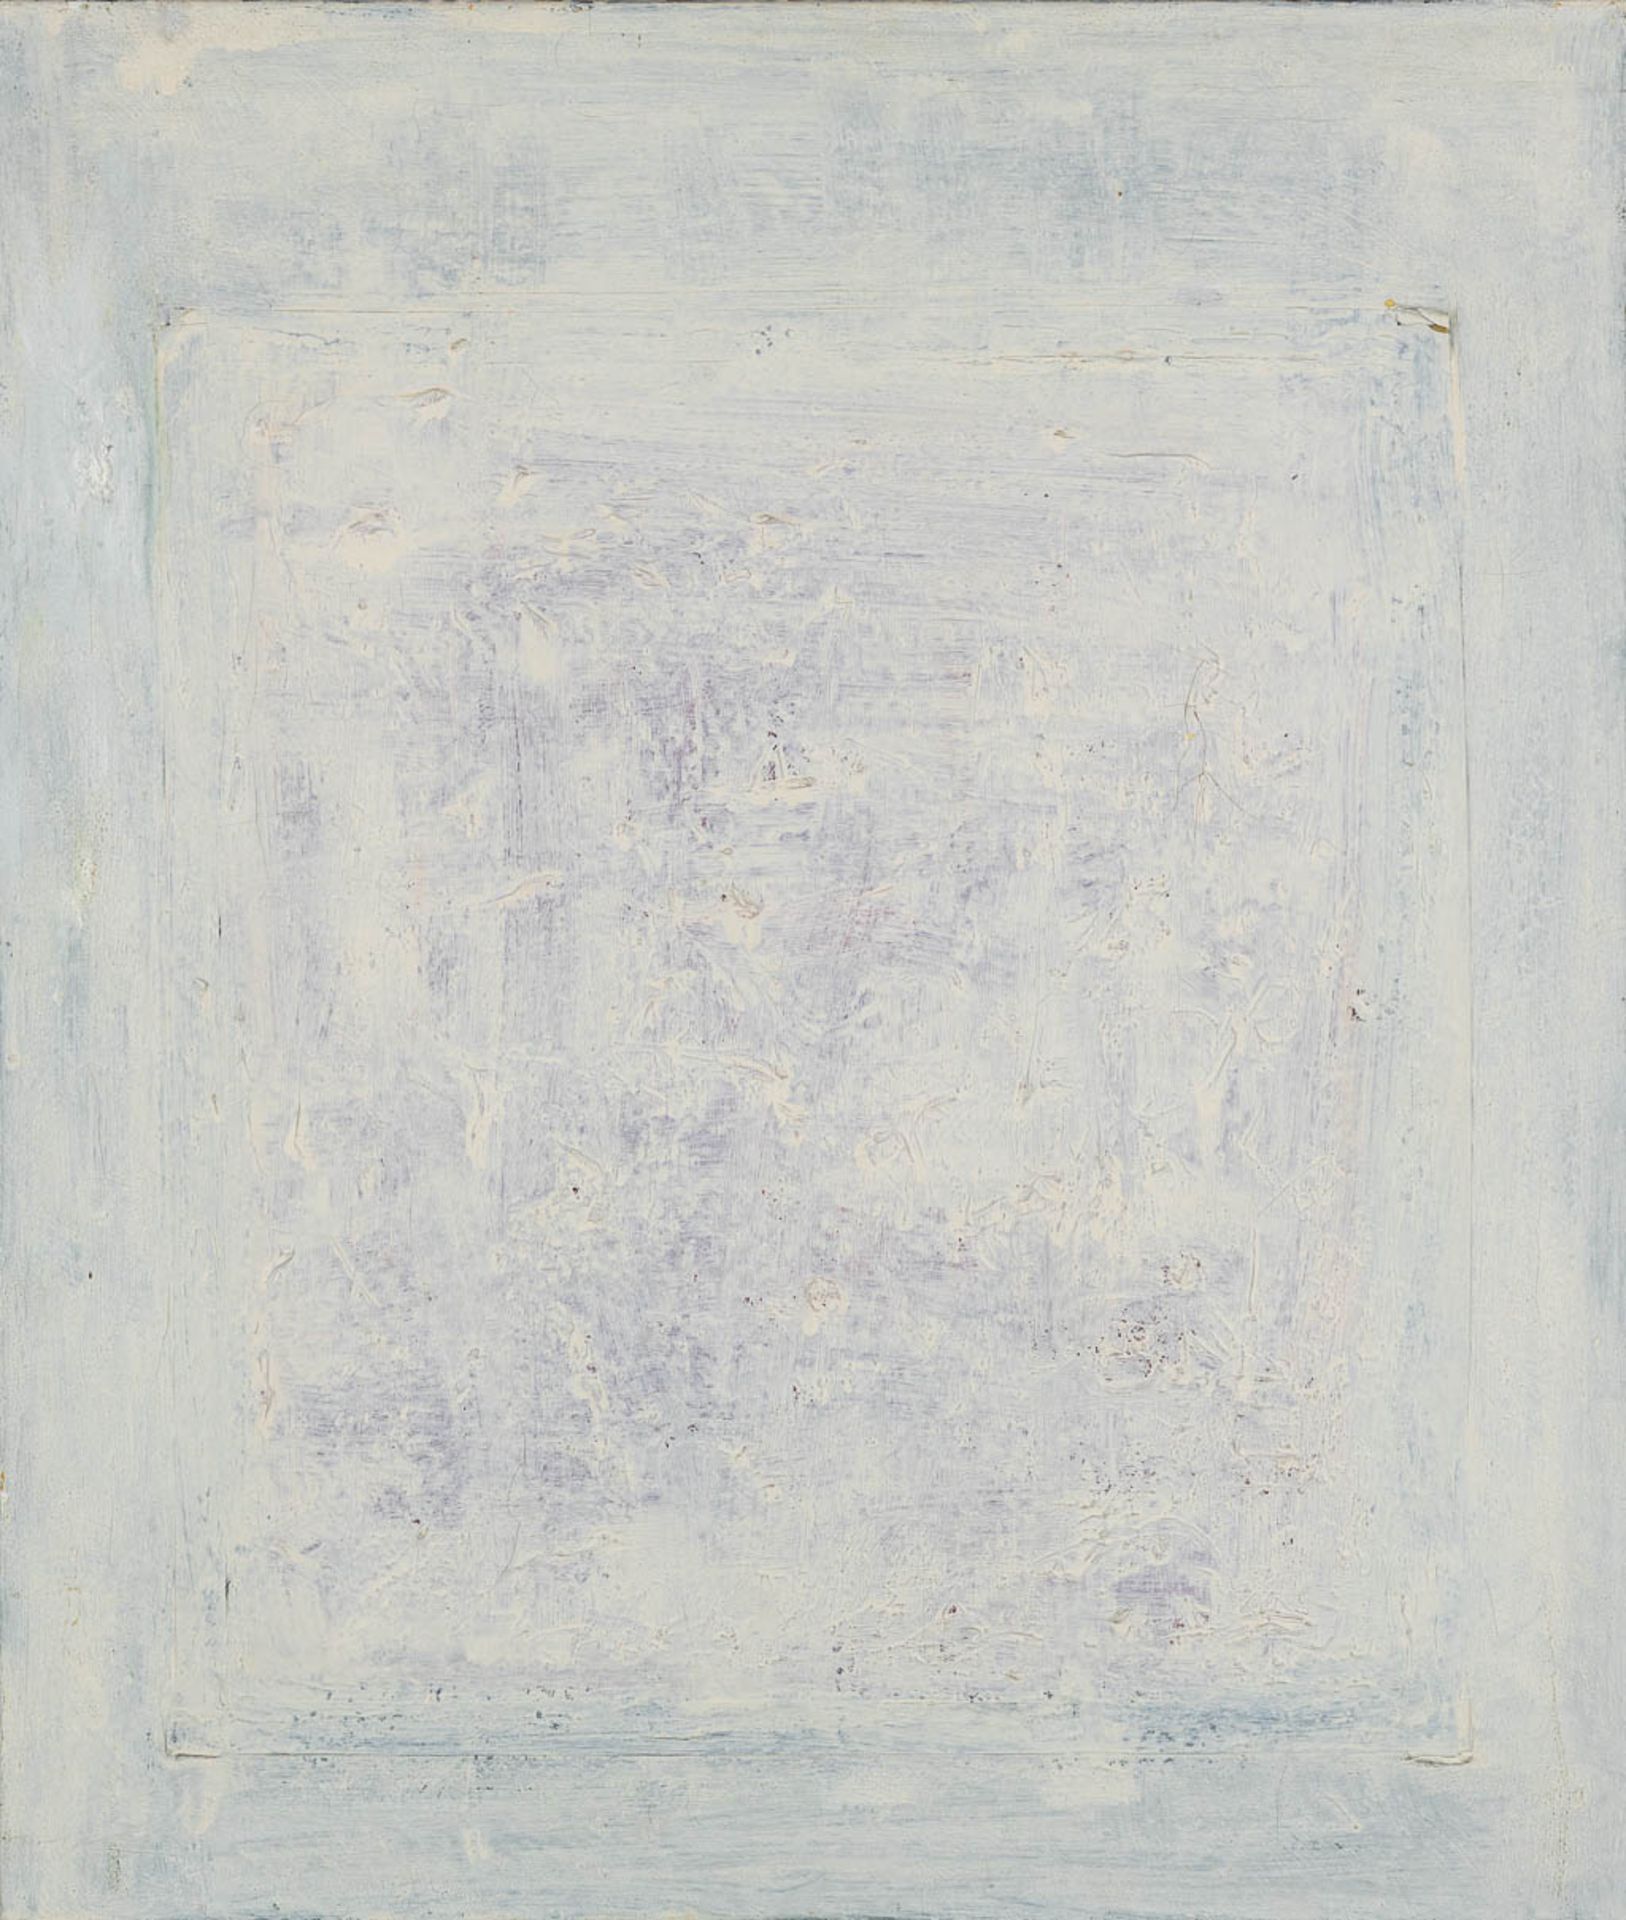 Huguette VAN DEN KIEBOOM (1931 - 2019) 'Abstract Wit' oil on canvas. (W:60 x H:70 cm)